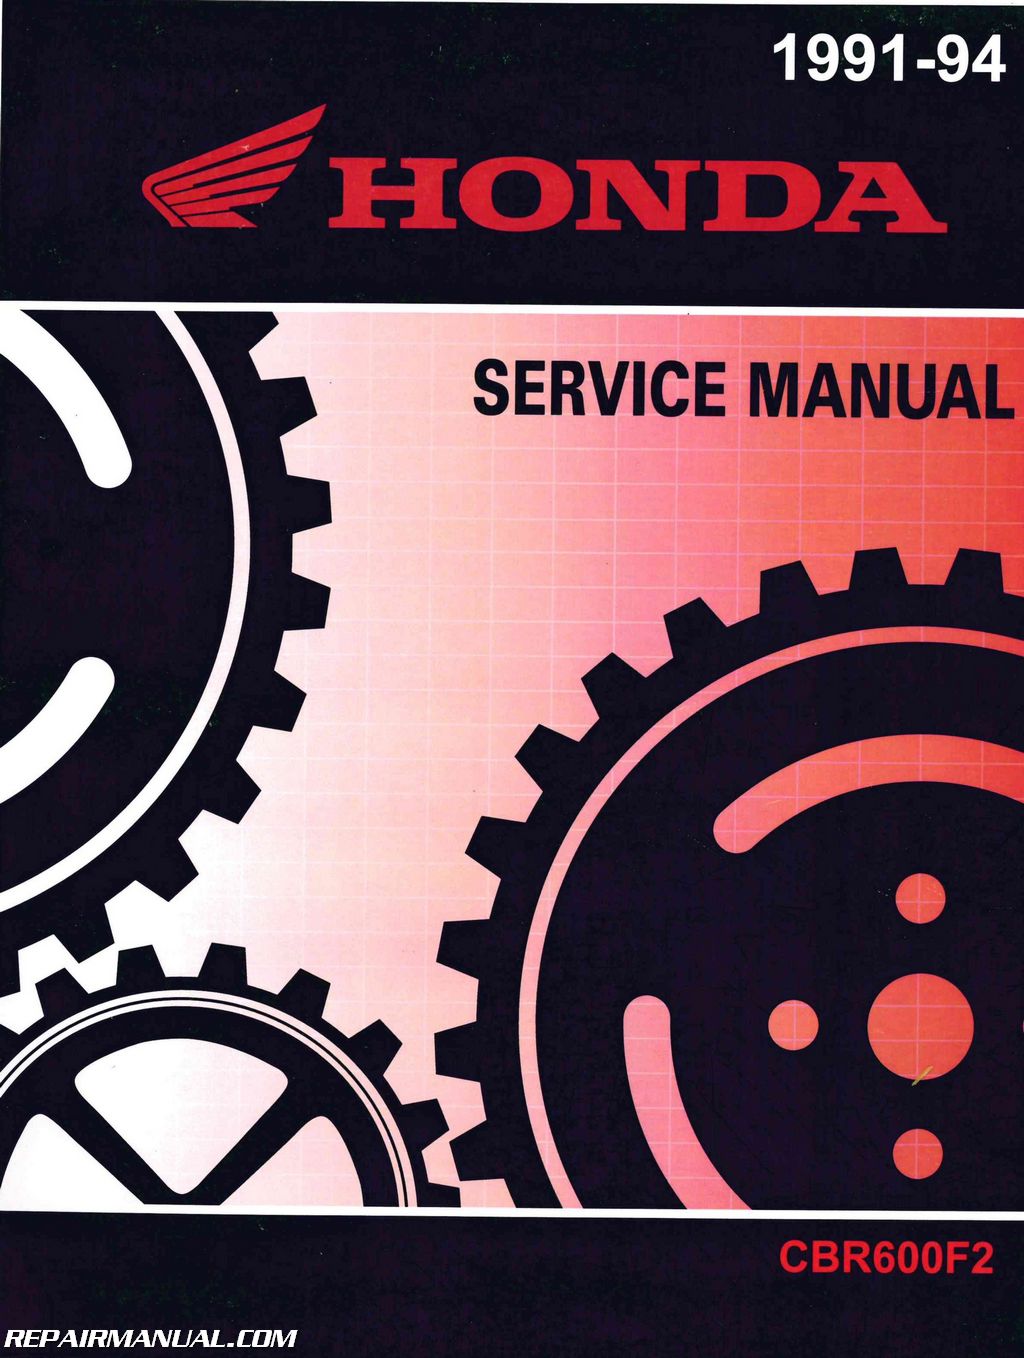 Manual de Taller o Reparacion de Honda CBR 600 F2 Repair manual 